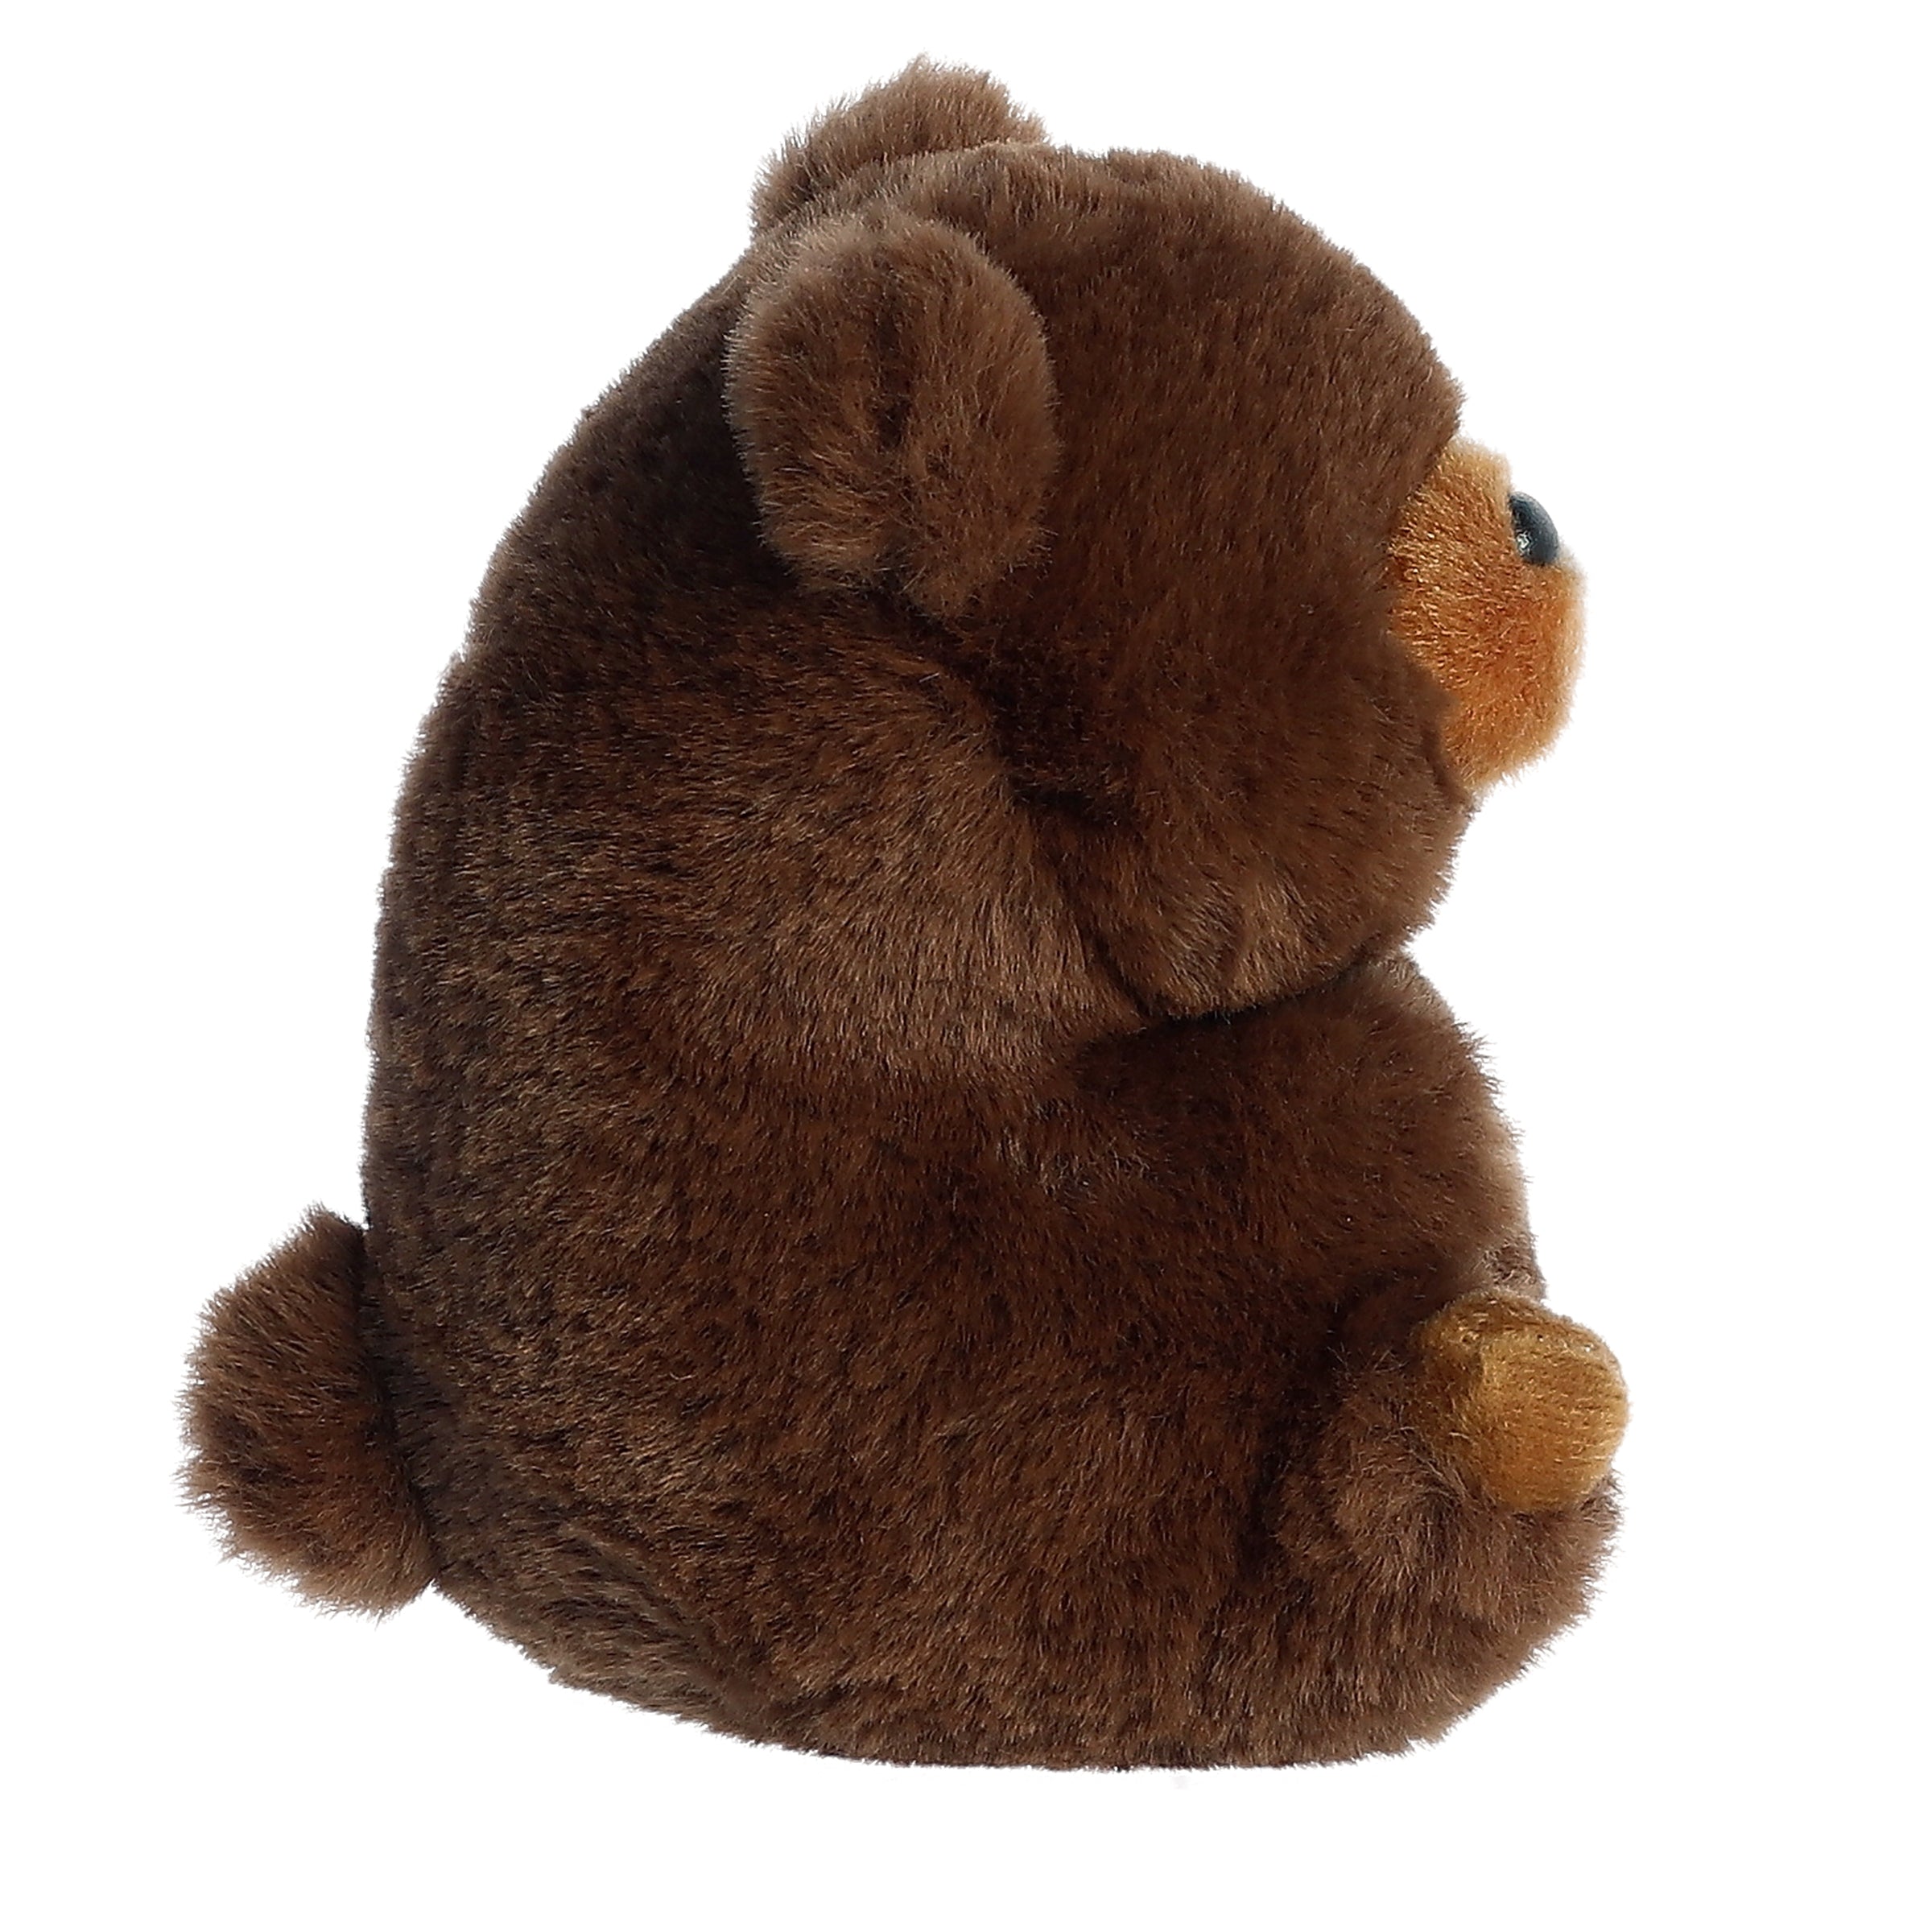 Brambles the Stuffed Brown Bear 5 Inch Rolly Pet, Aurora